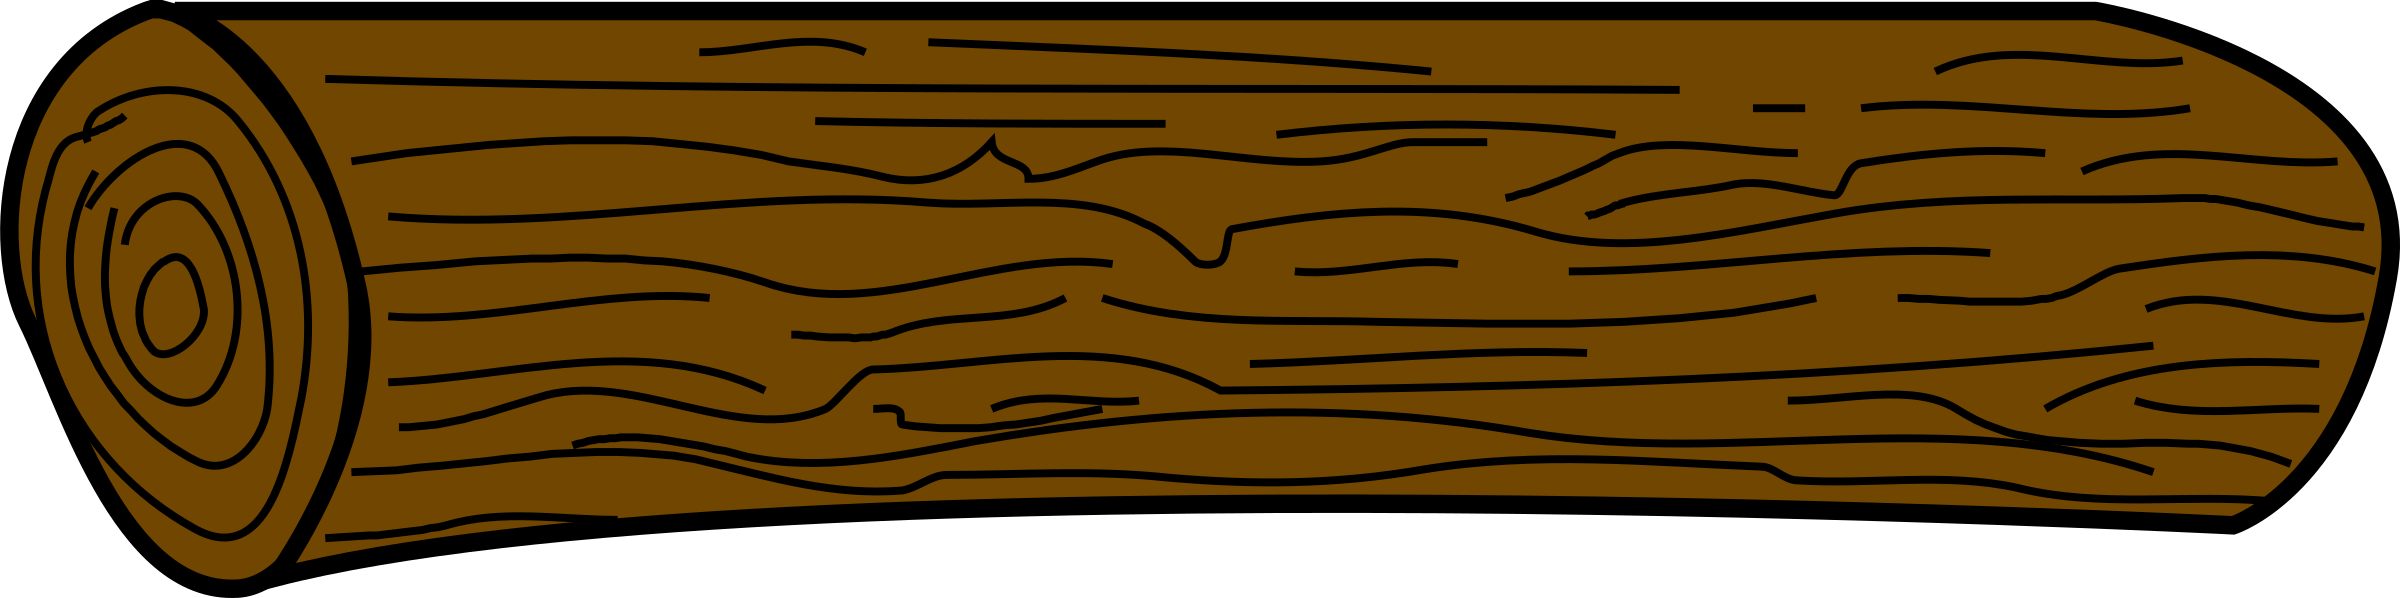 cartoon log